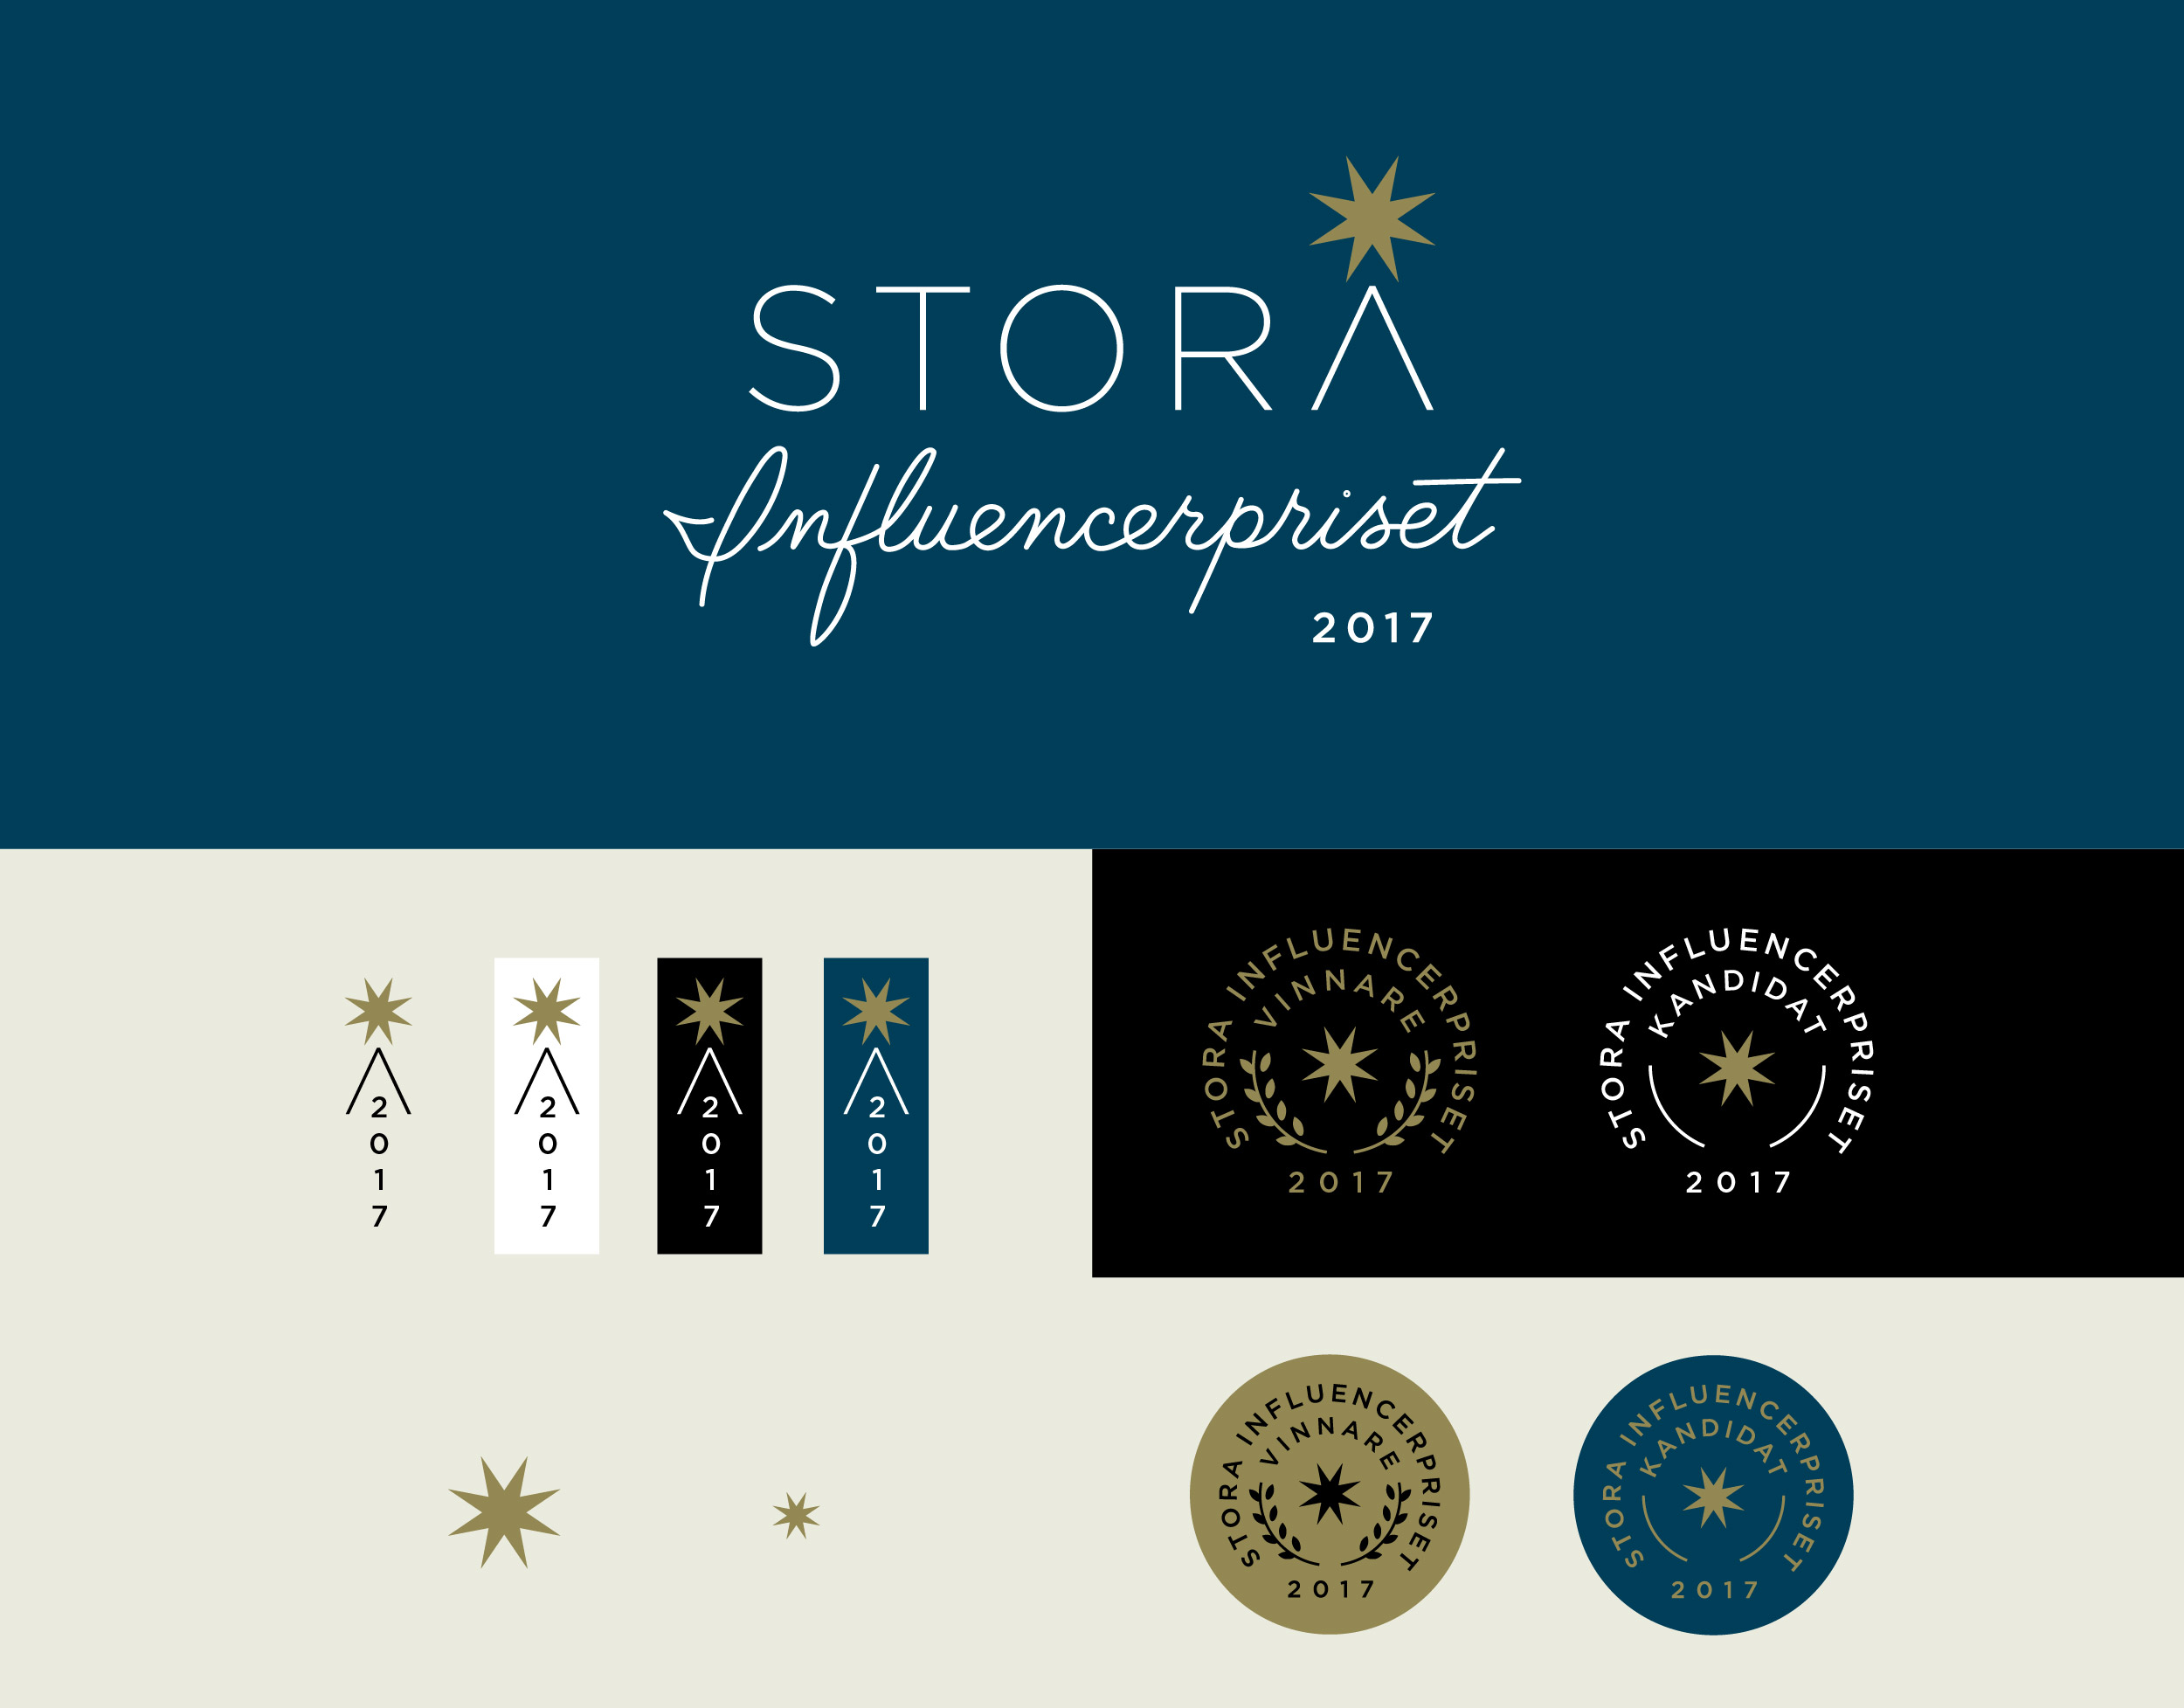 Stora Influencerpriset logo and badges by Hoodzpah